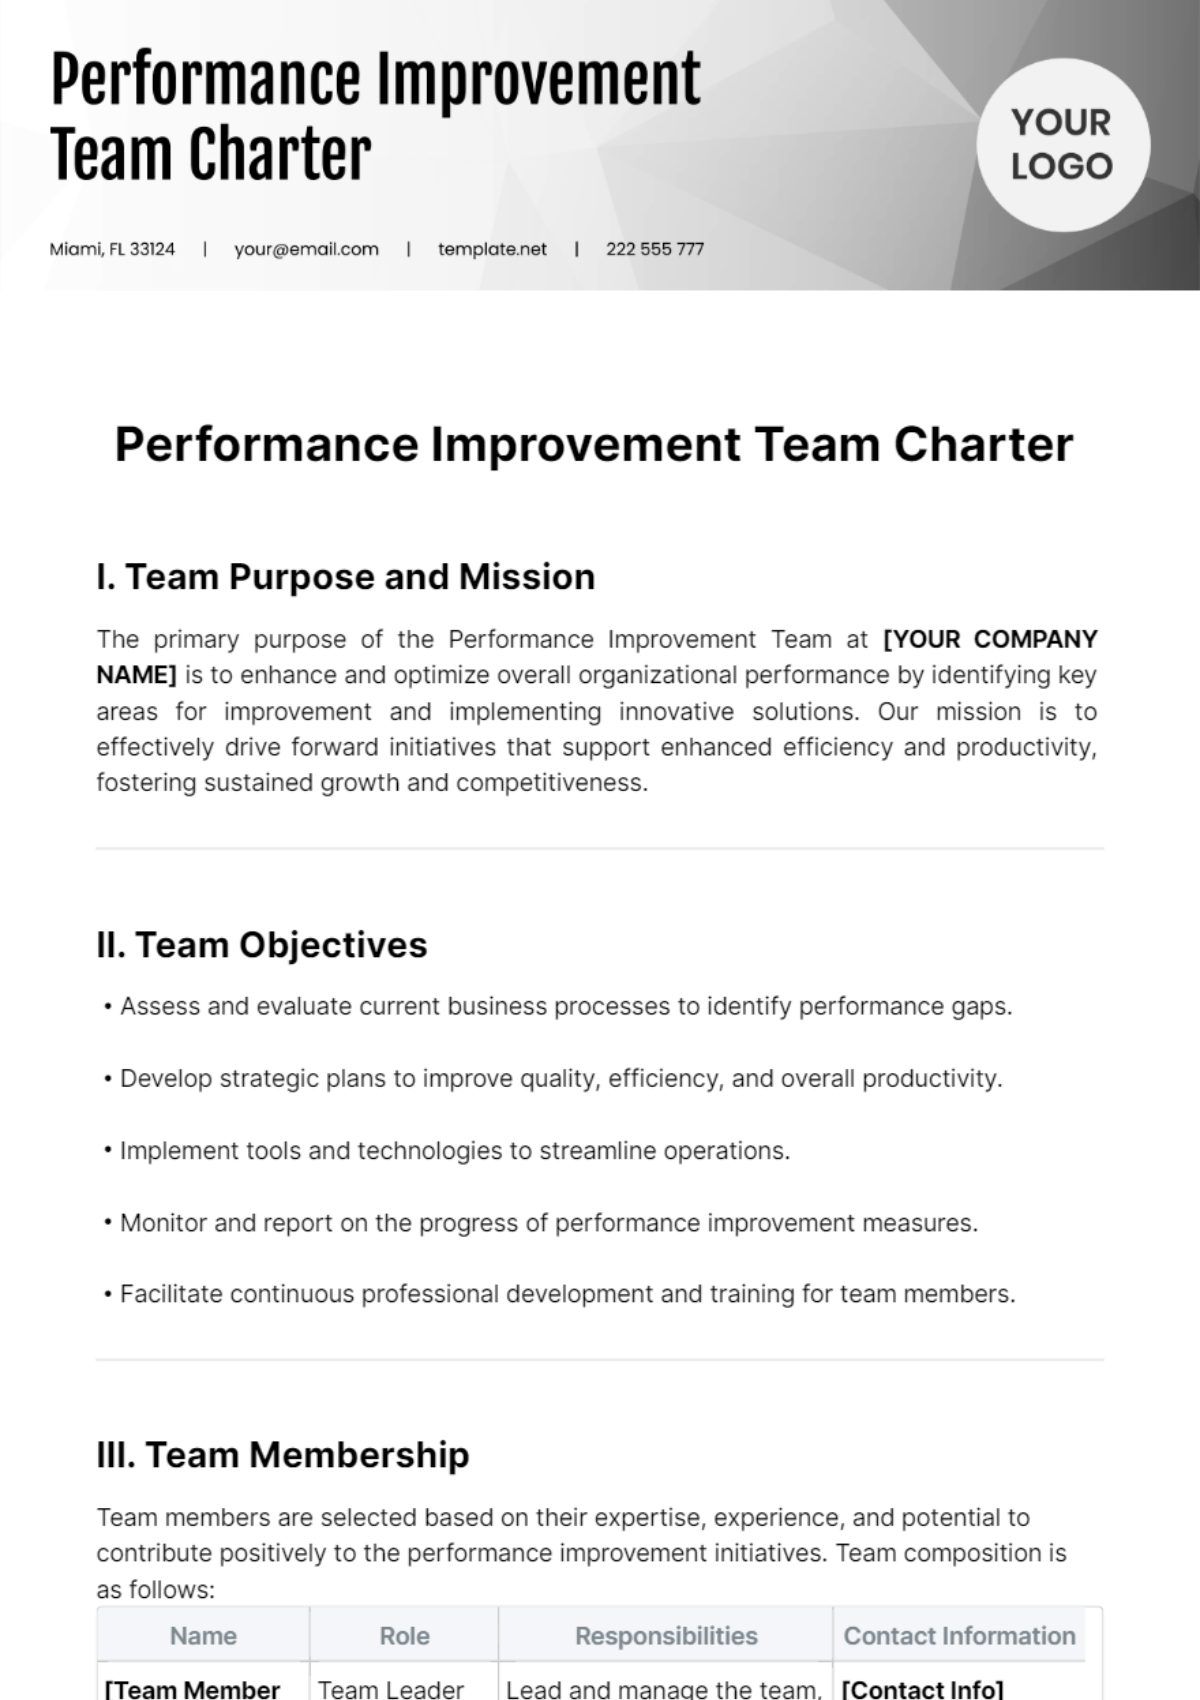 Free Performance Improvement Team Charter Template